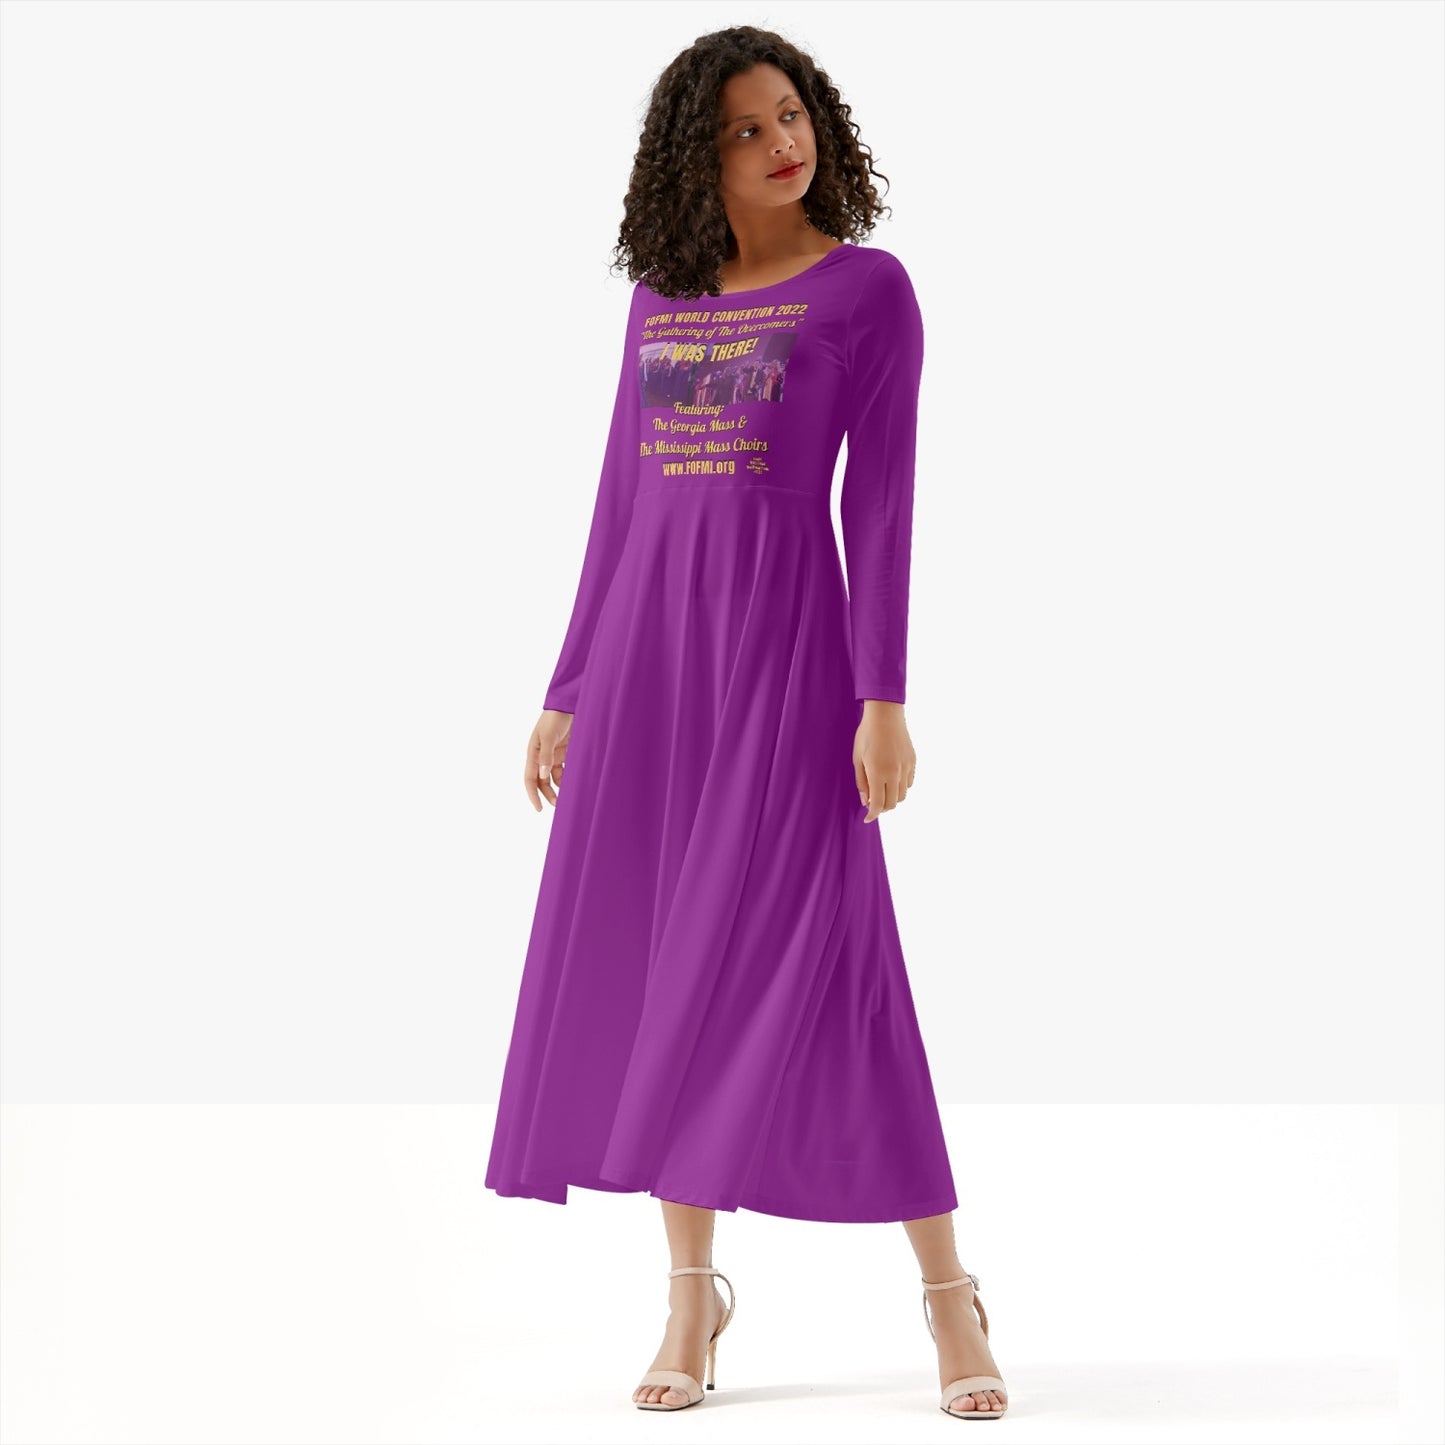 FOFMI World Convention 2022 Women's Long-Sleeve One-piece Dress